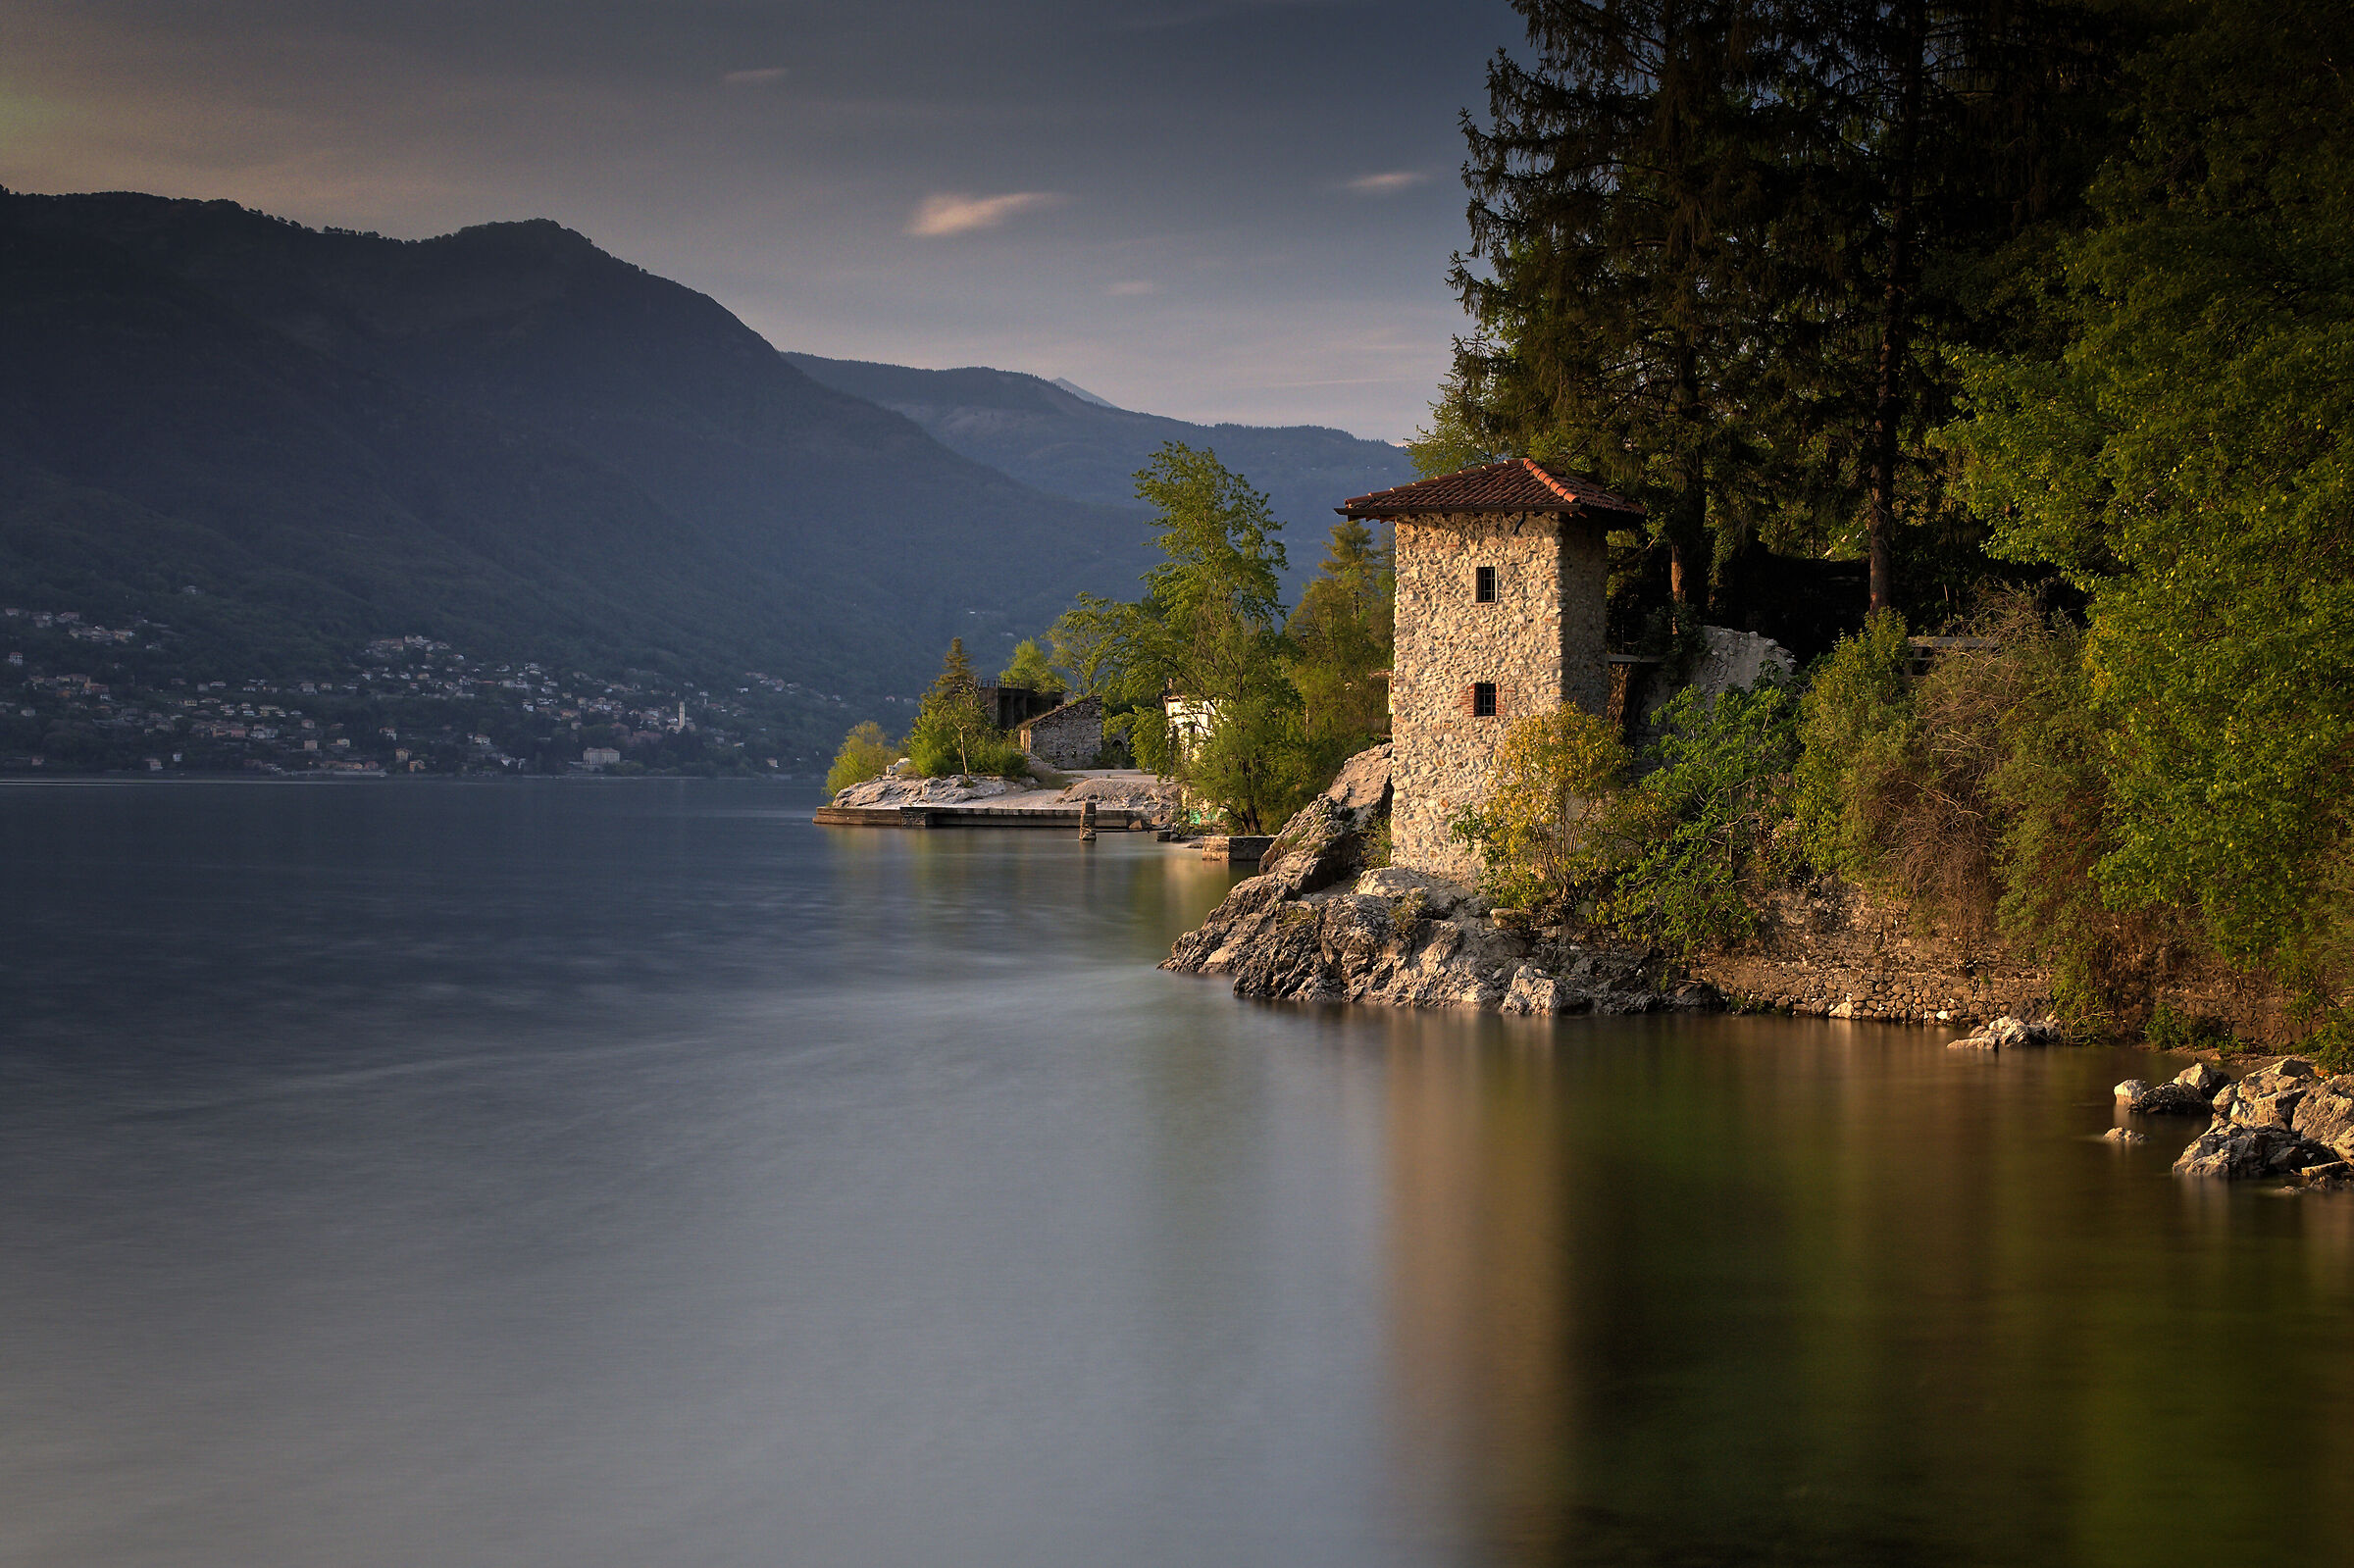 Lake Maggiore "Park of the furnaces"...